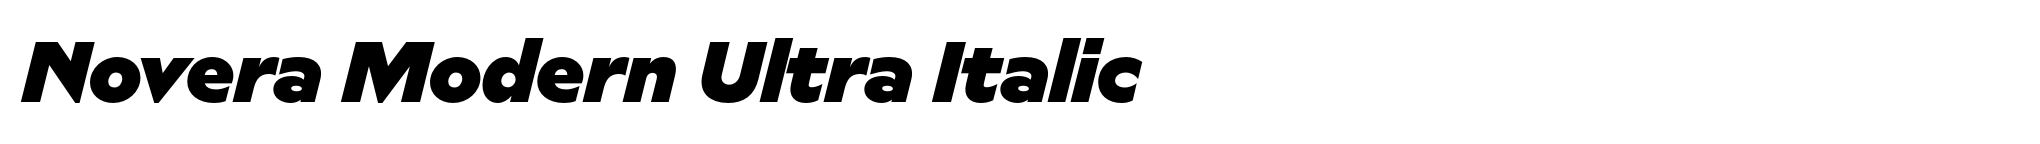 Novera Modern Ultra Italic image